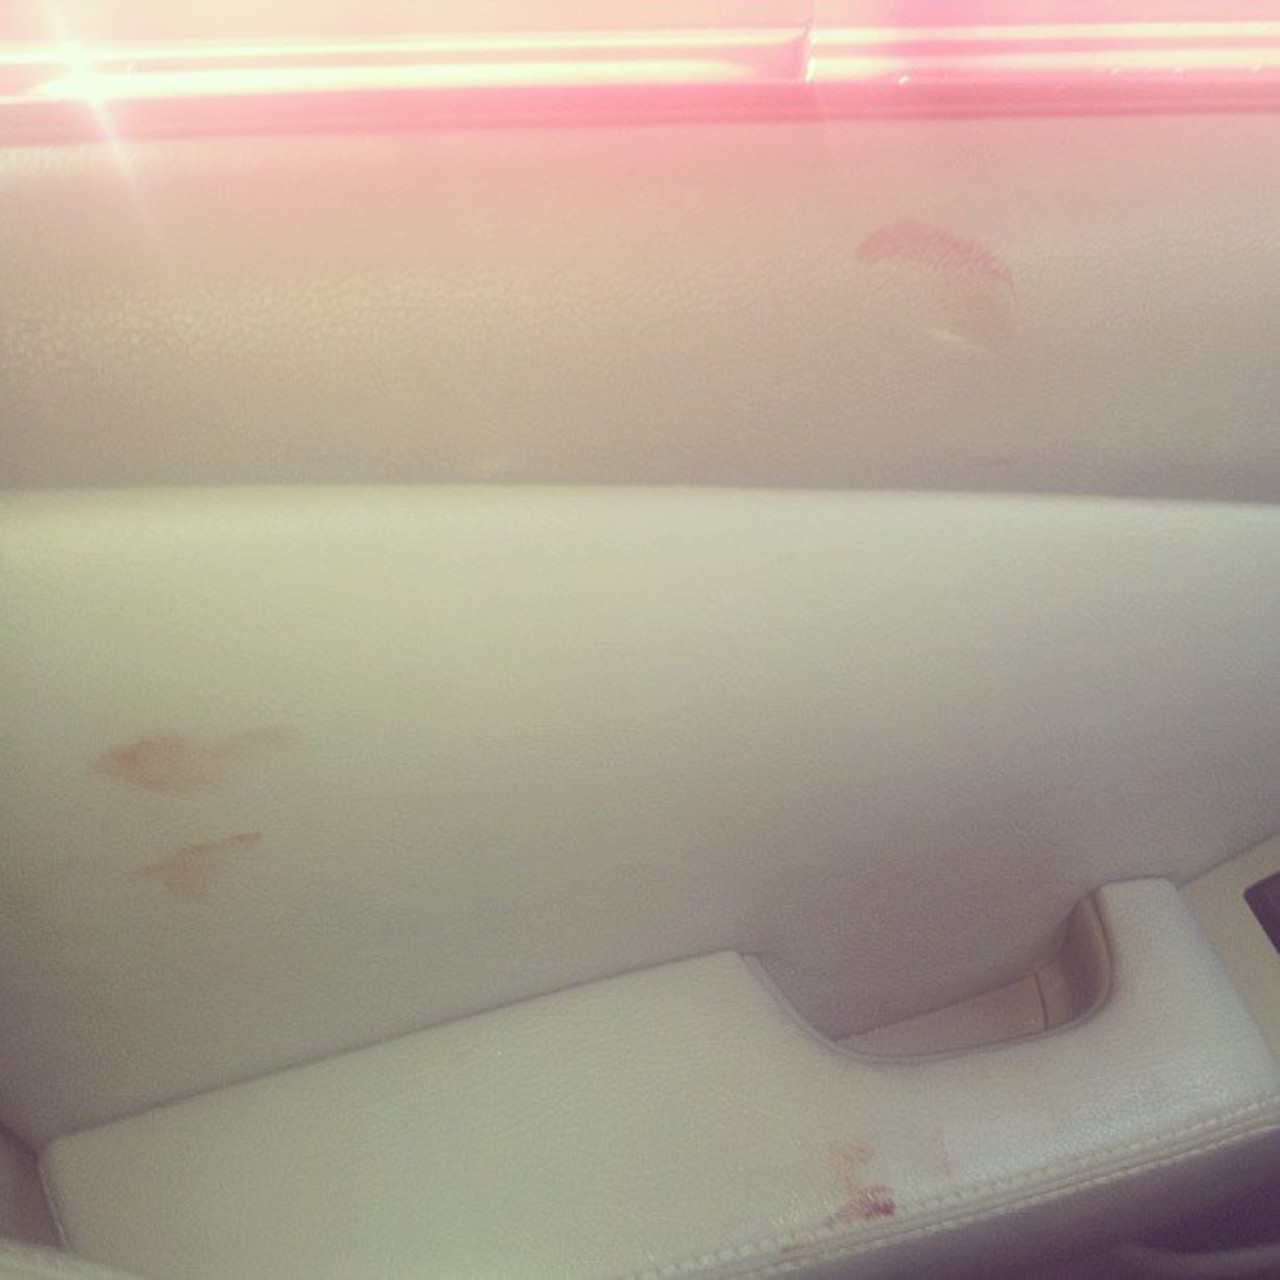 Because after working the weekend, your car looks like a crime scene.
Photo via blondeyankeegirl on Instagram